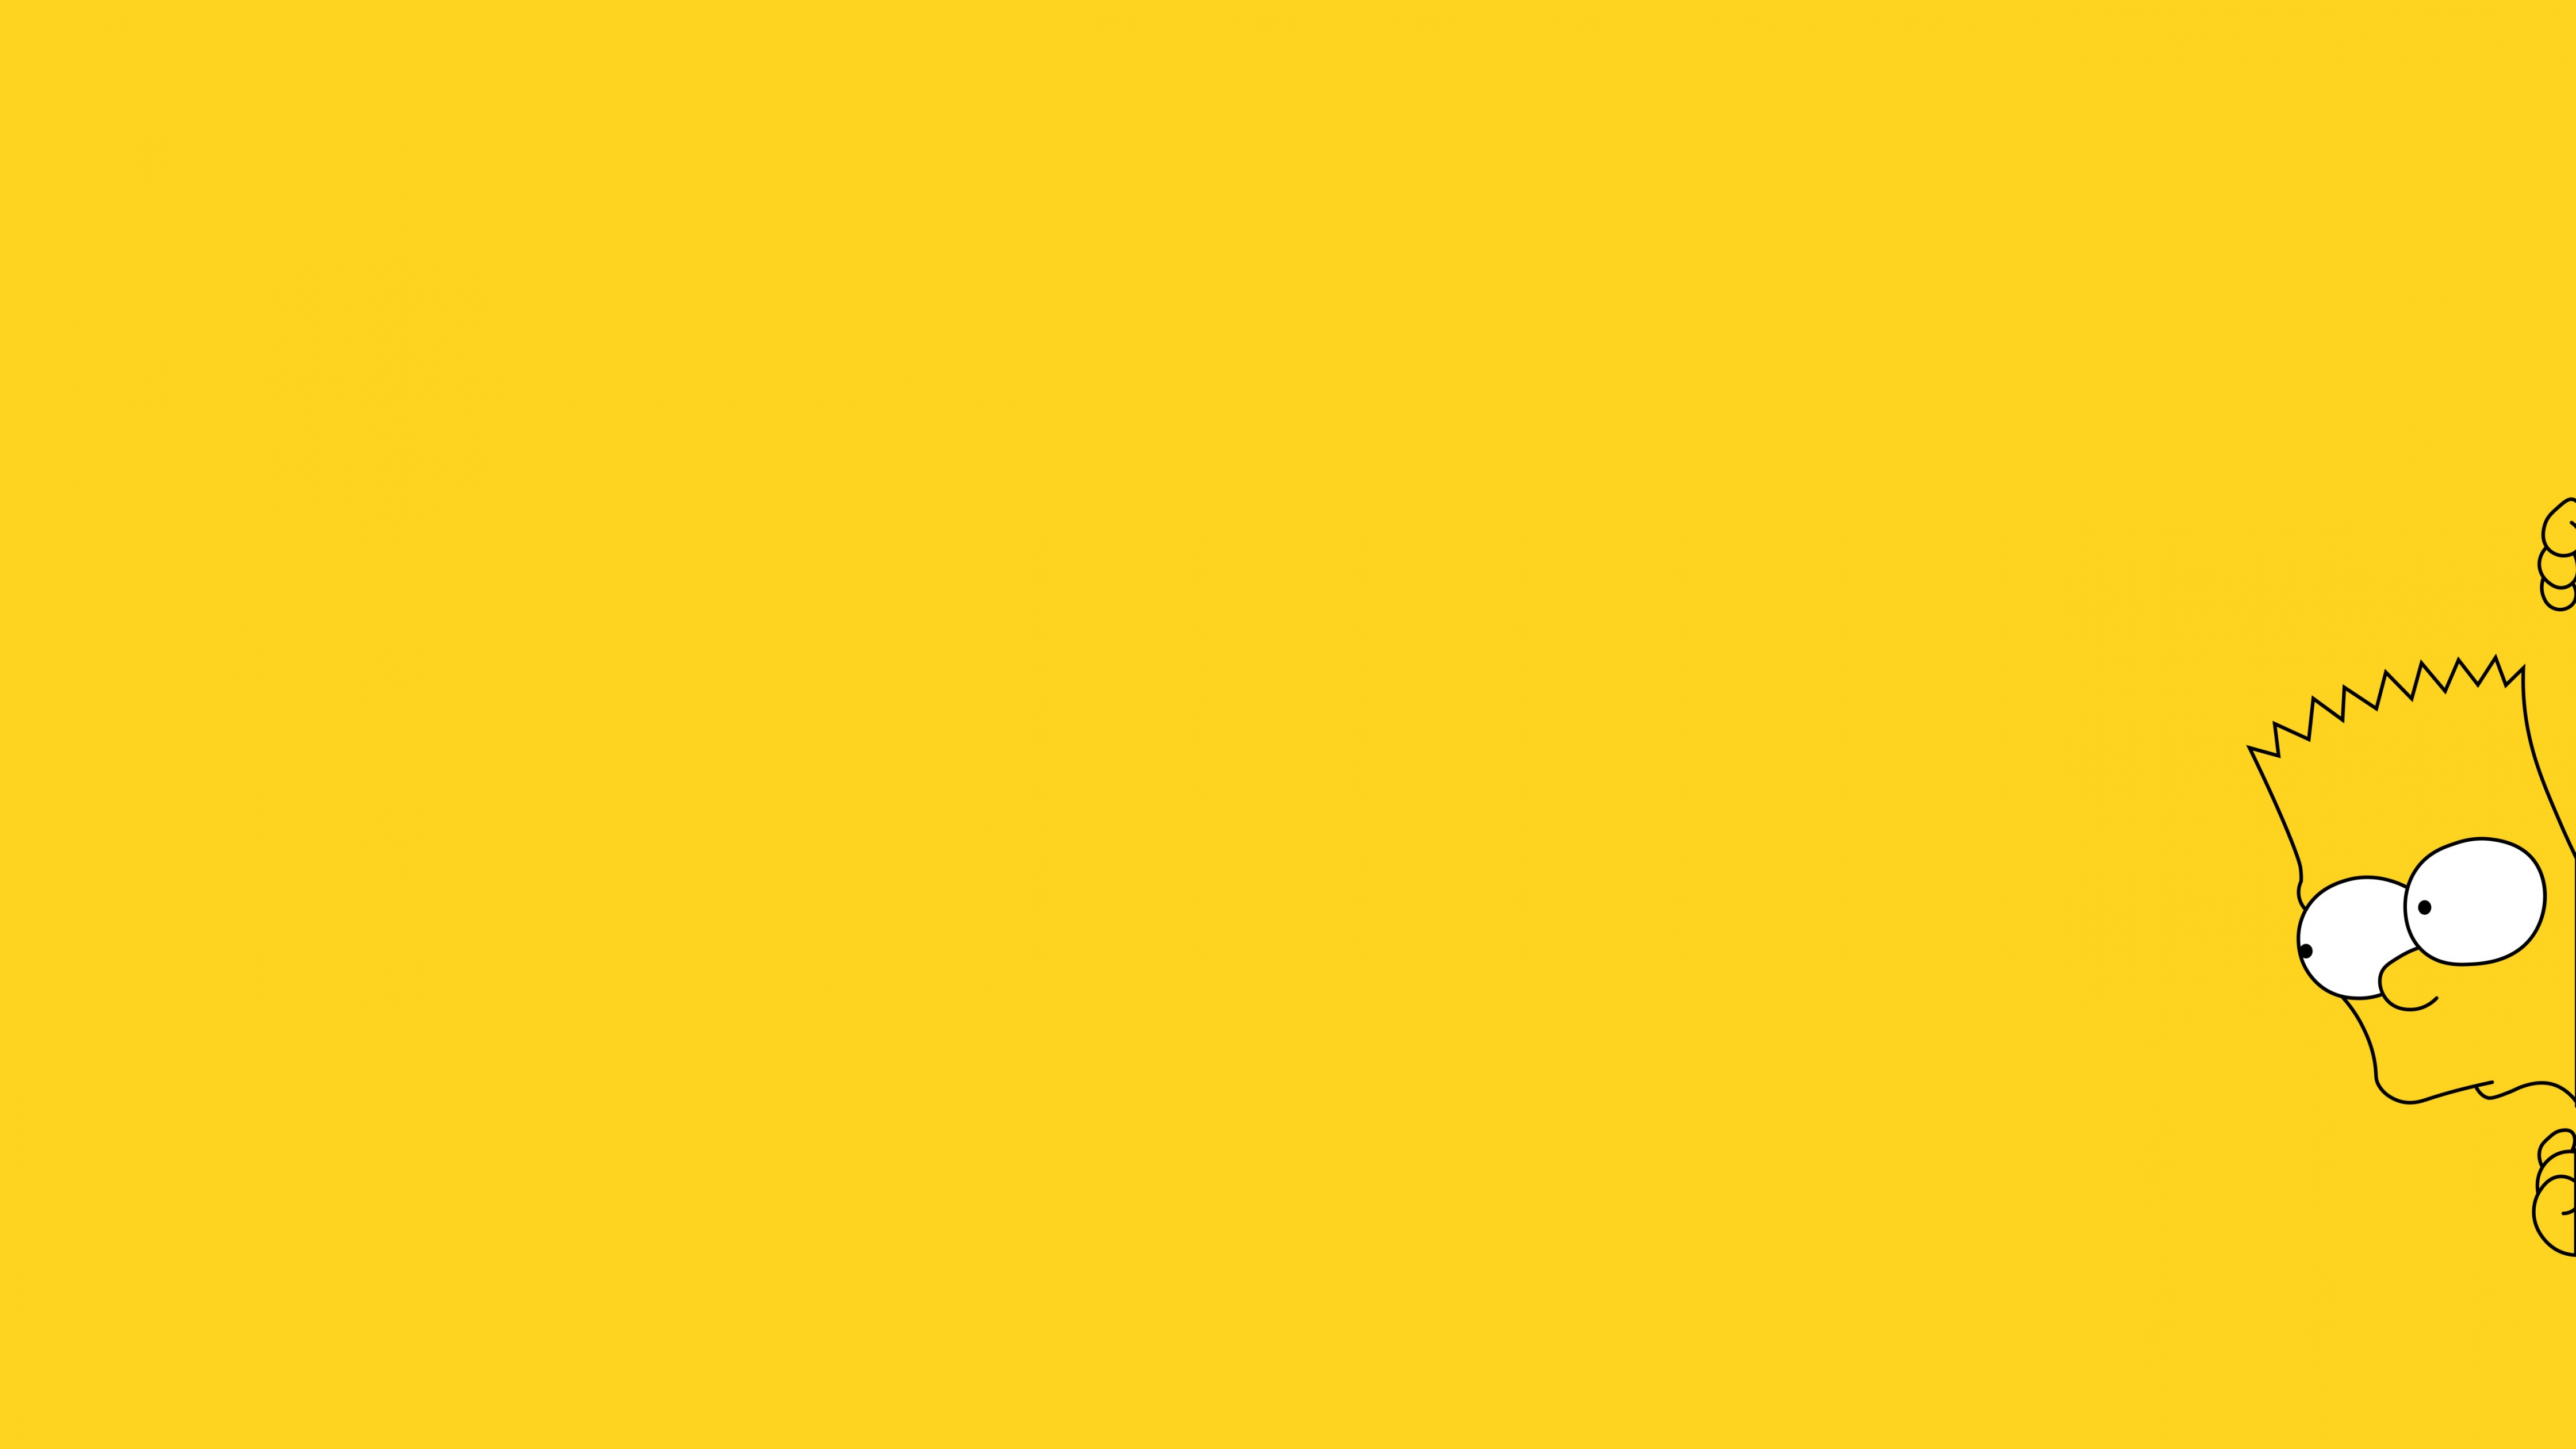 Wallpaper bart simpson, the simpsons, yellow background, minimalism, 2560x1440 wallpaper - The Simpsons